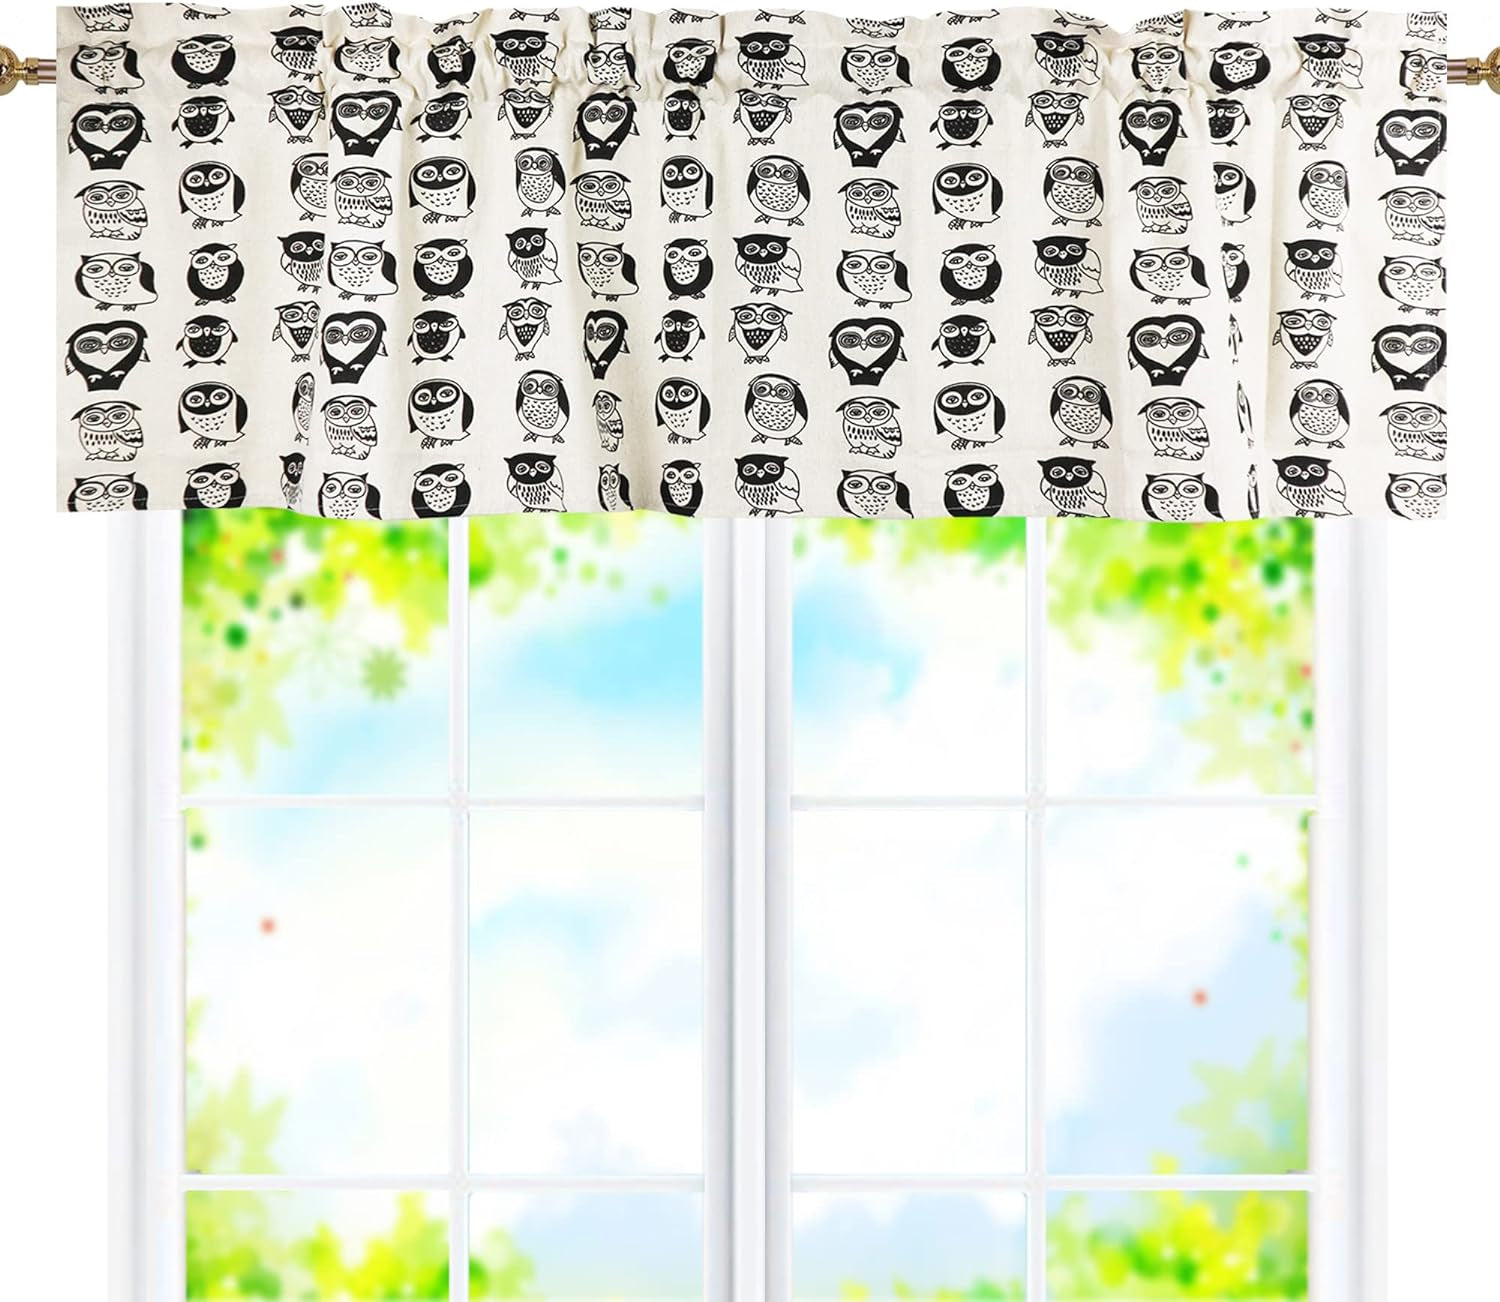 2 Panels Festive White Window Valances Curtain Valances - Short Curtains for Kitchen Windows/Bathroom/Laundry Decoration - 52X18 Inch with Rod Pocket